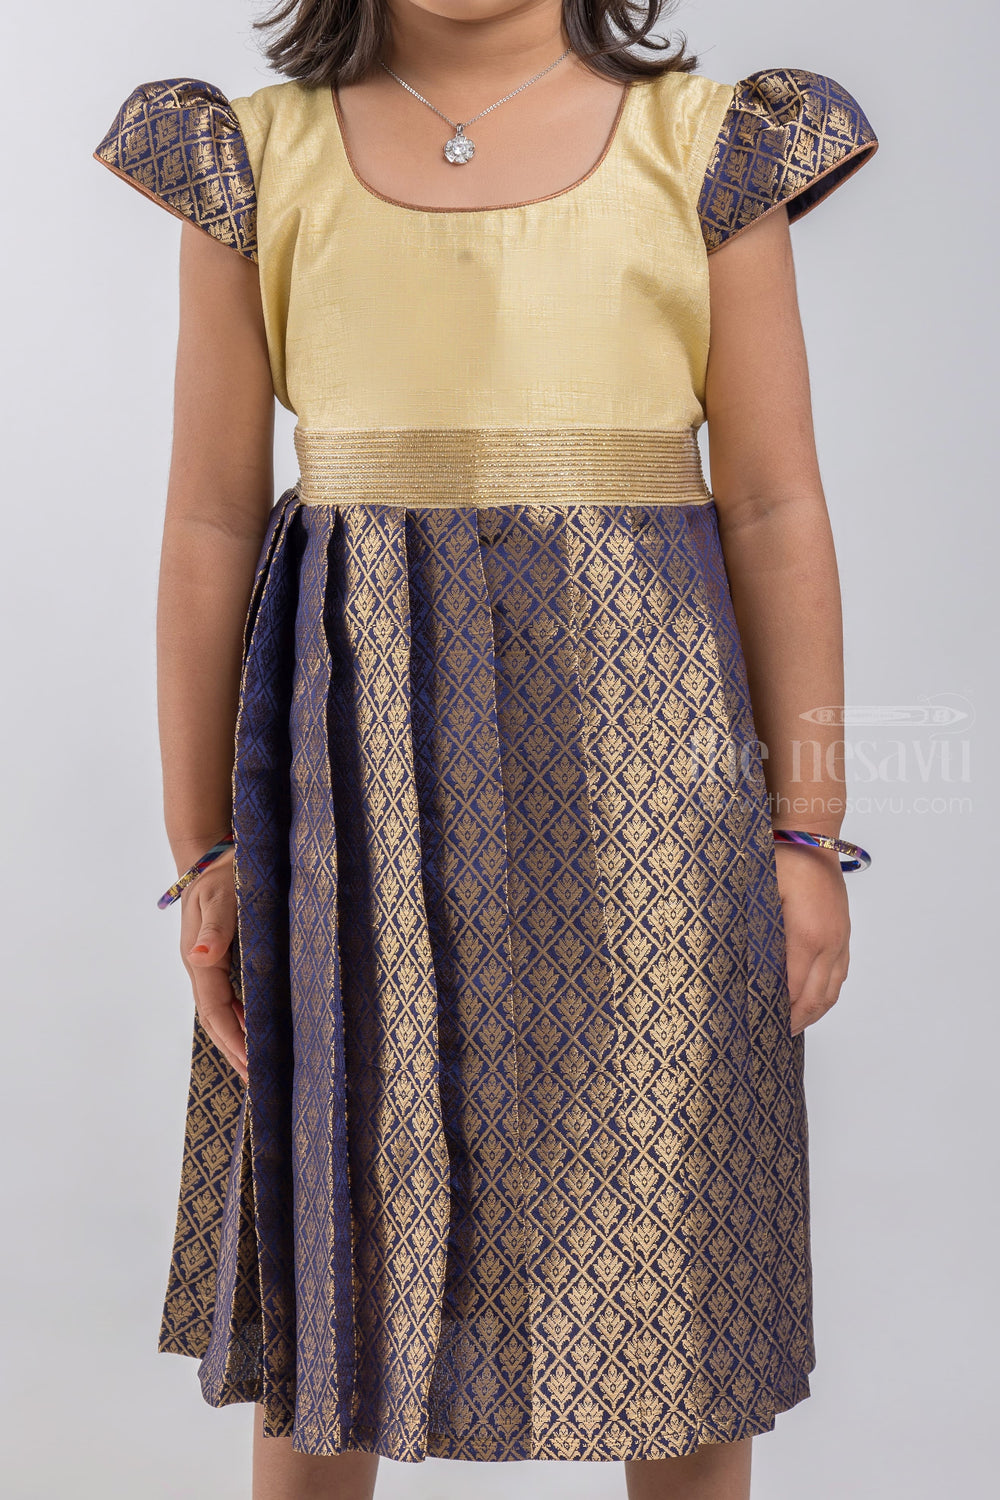 The Nesavu Silk Embroidered Frock Zari Floral Designer Blue Semi Dreamy Pattu Dress for Little Angels psr silks Nesavu